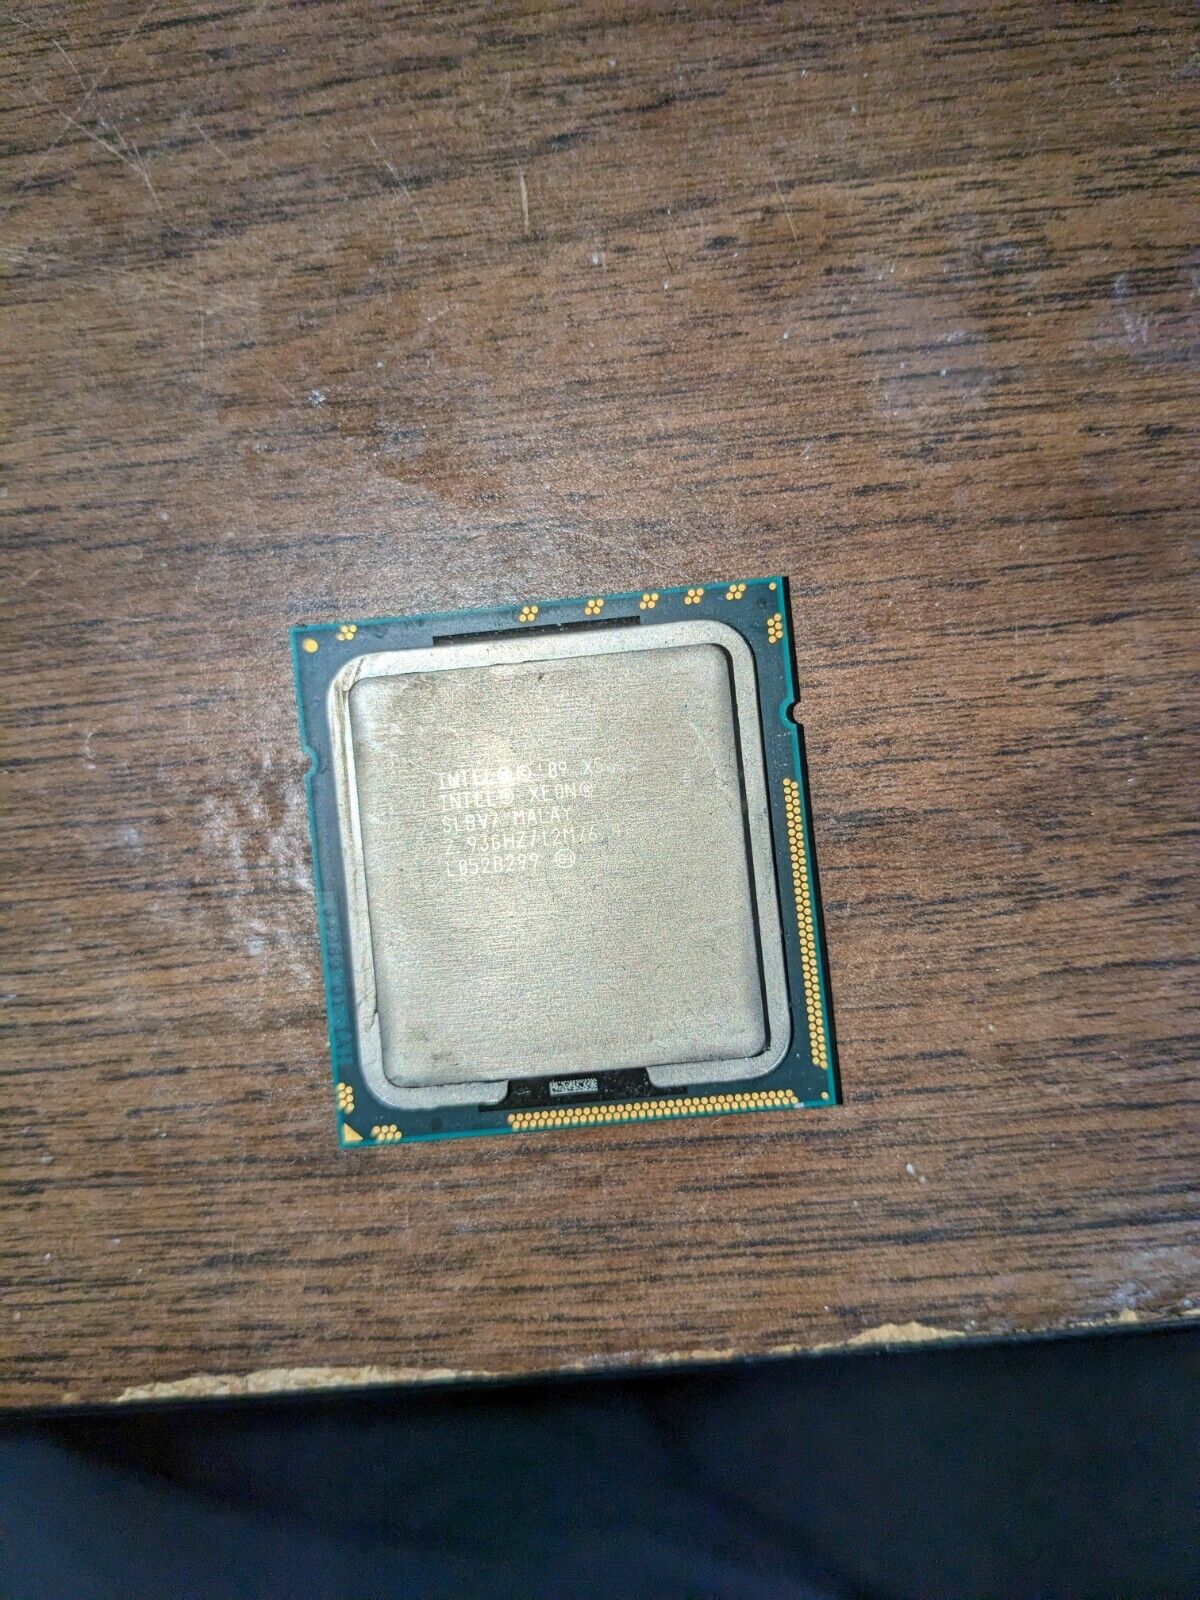 Intel Xeon X5670 2.93 GHz 6-Core (SLBV7) Processor